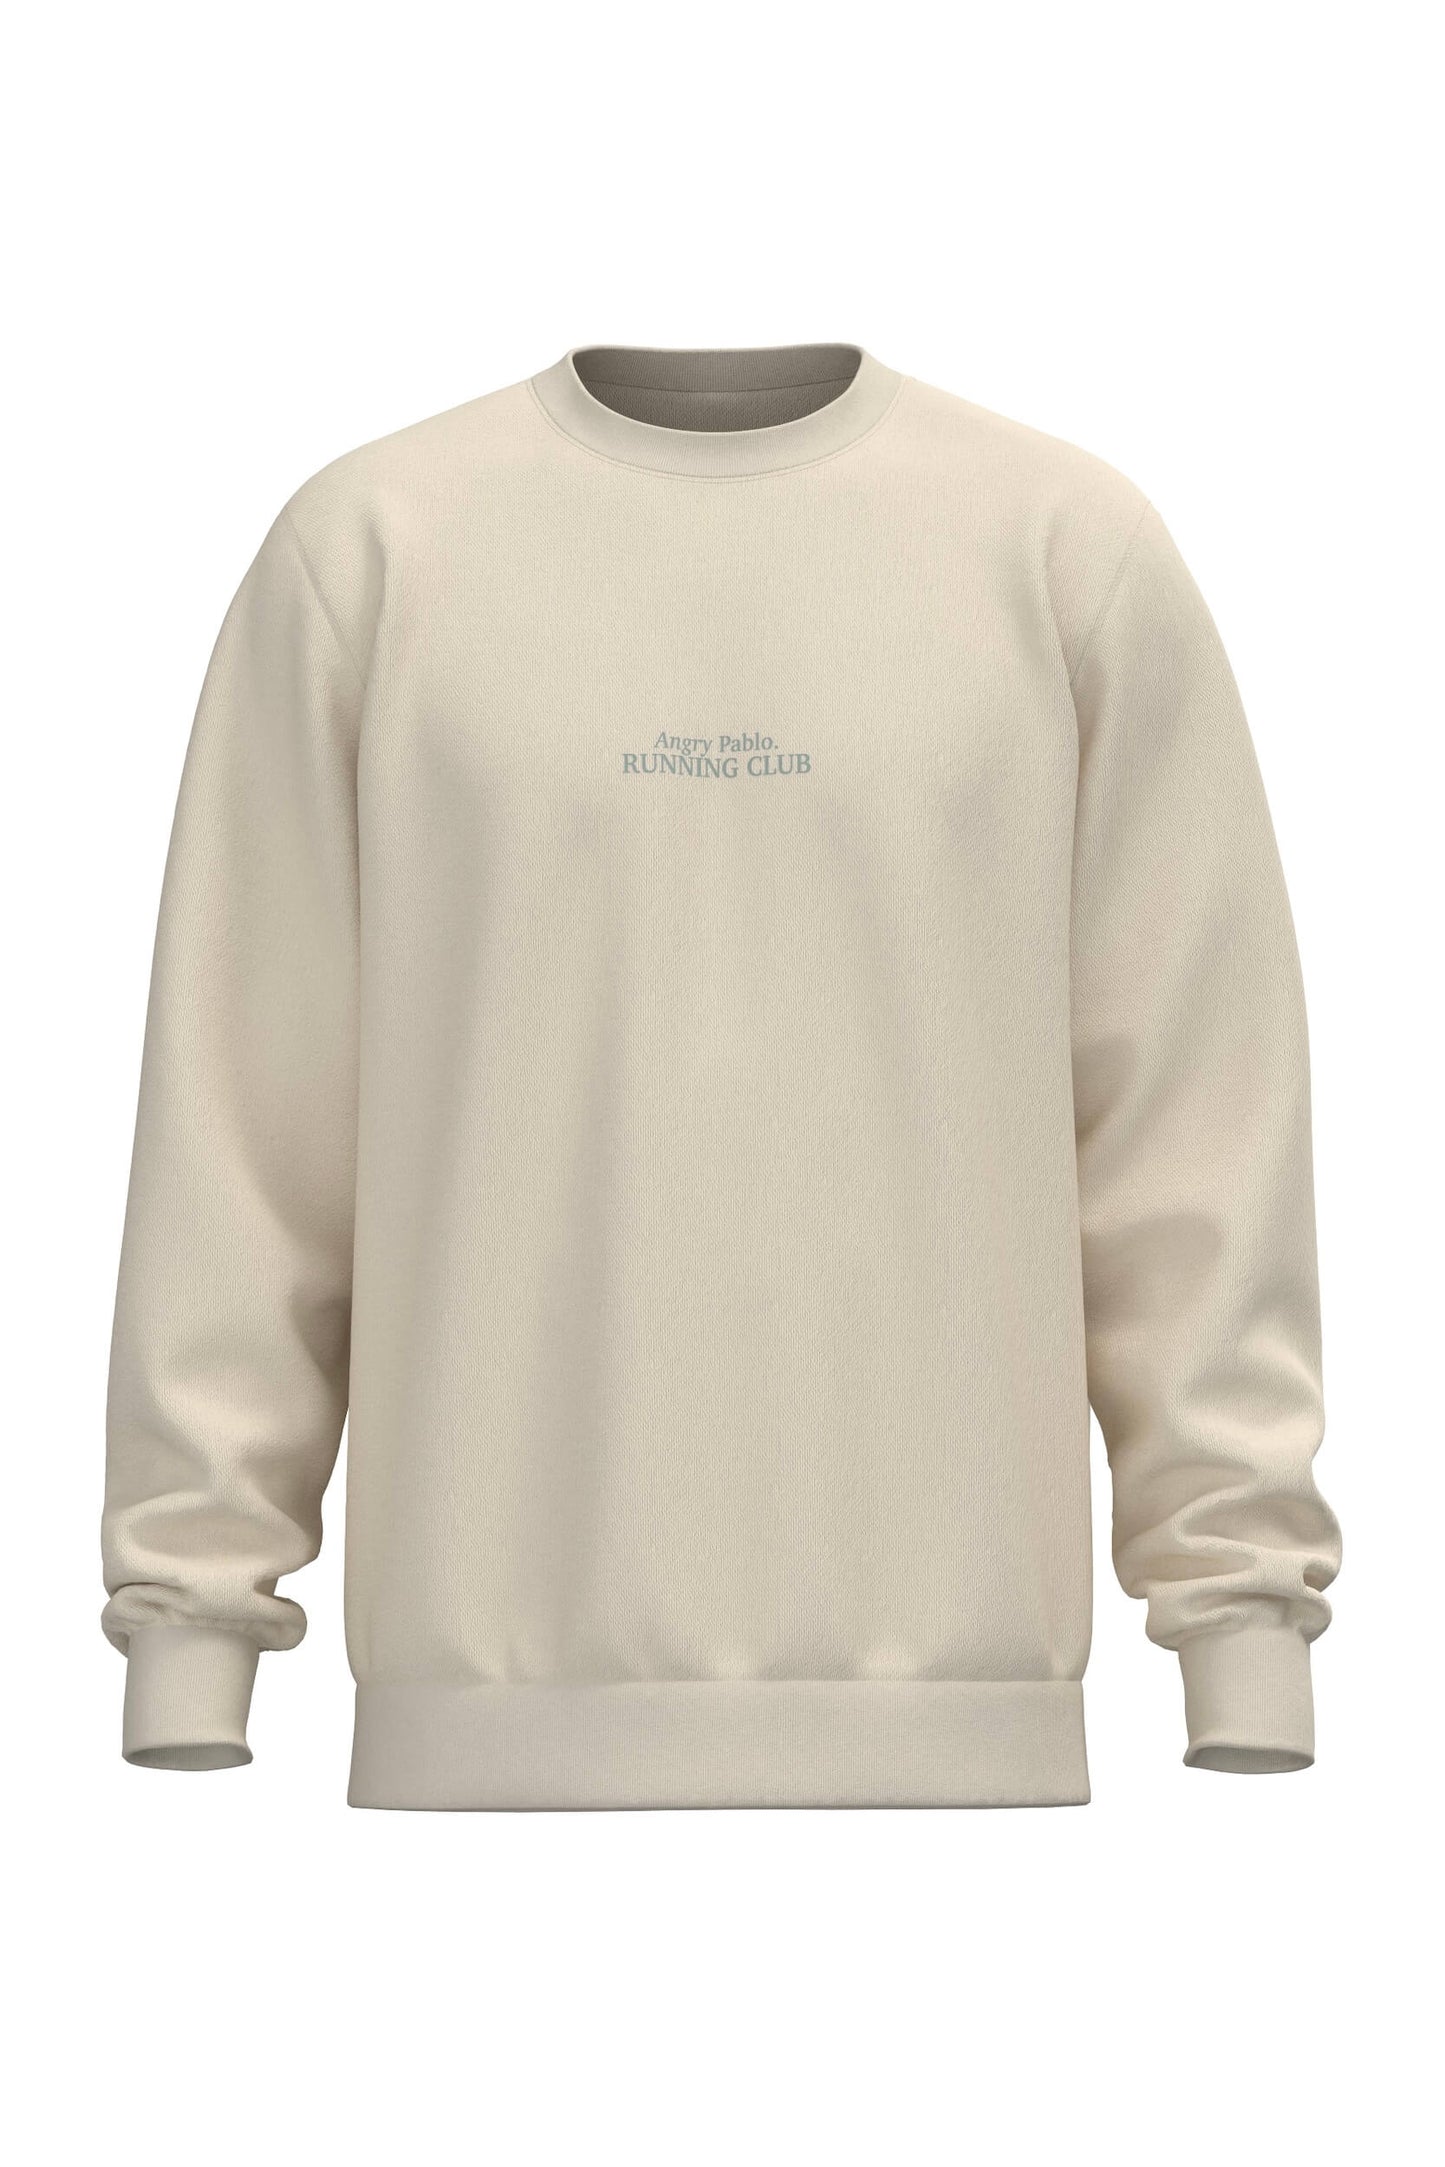 Social Run Club Sweatshirt / Cream